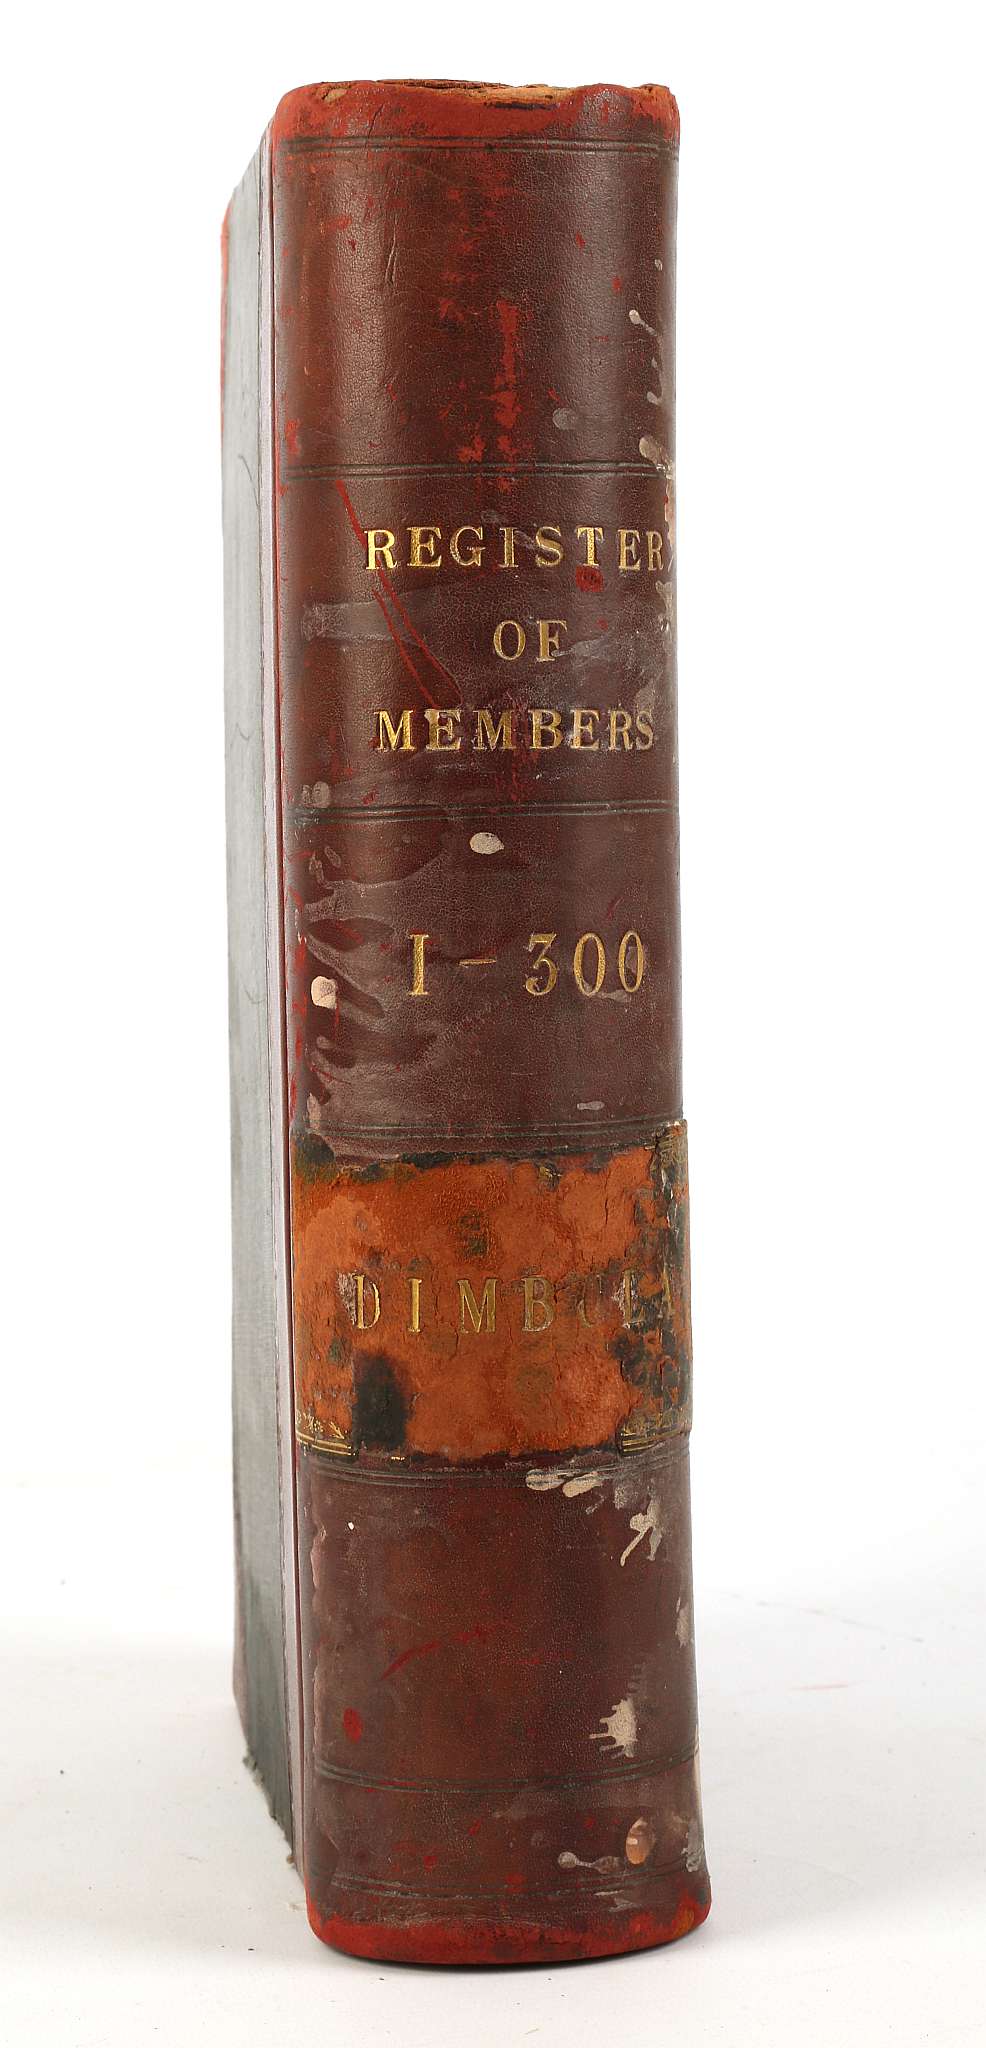 CEYLON TEA - MS. Dimbula Valley (Ceylon) Tea Company Limited. c.1896. Folio. Register of Members and - Image 2 of 5